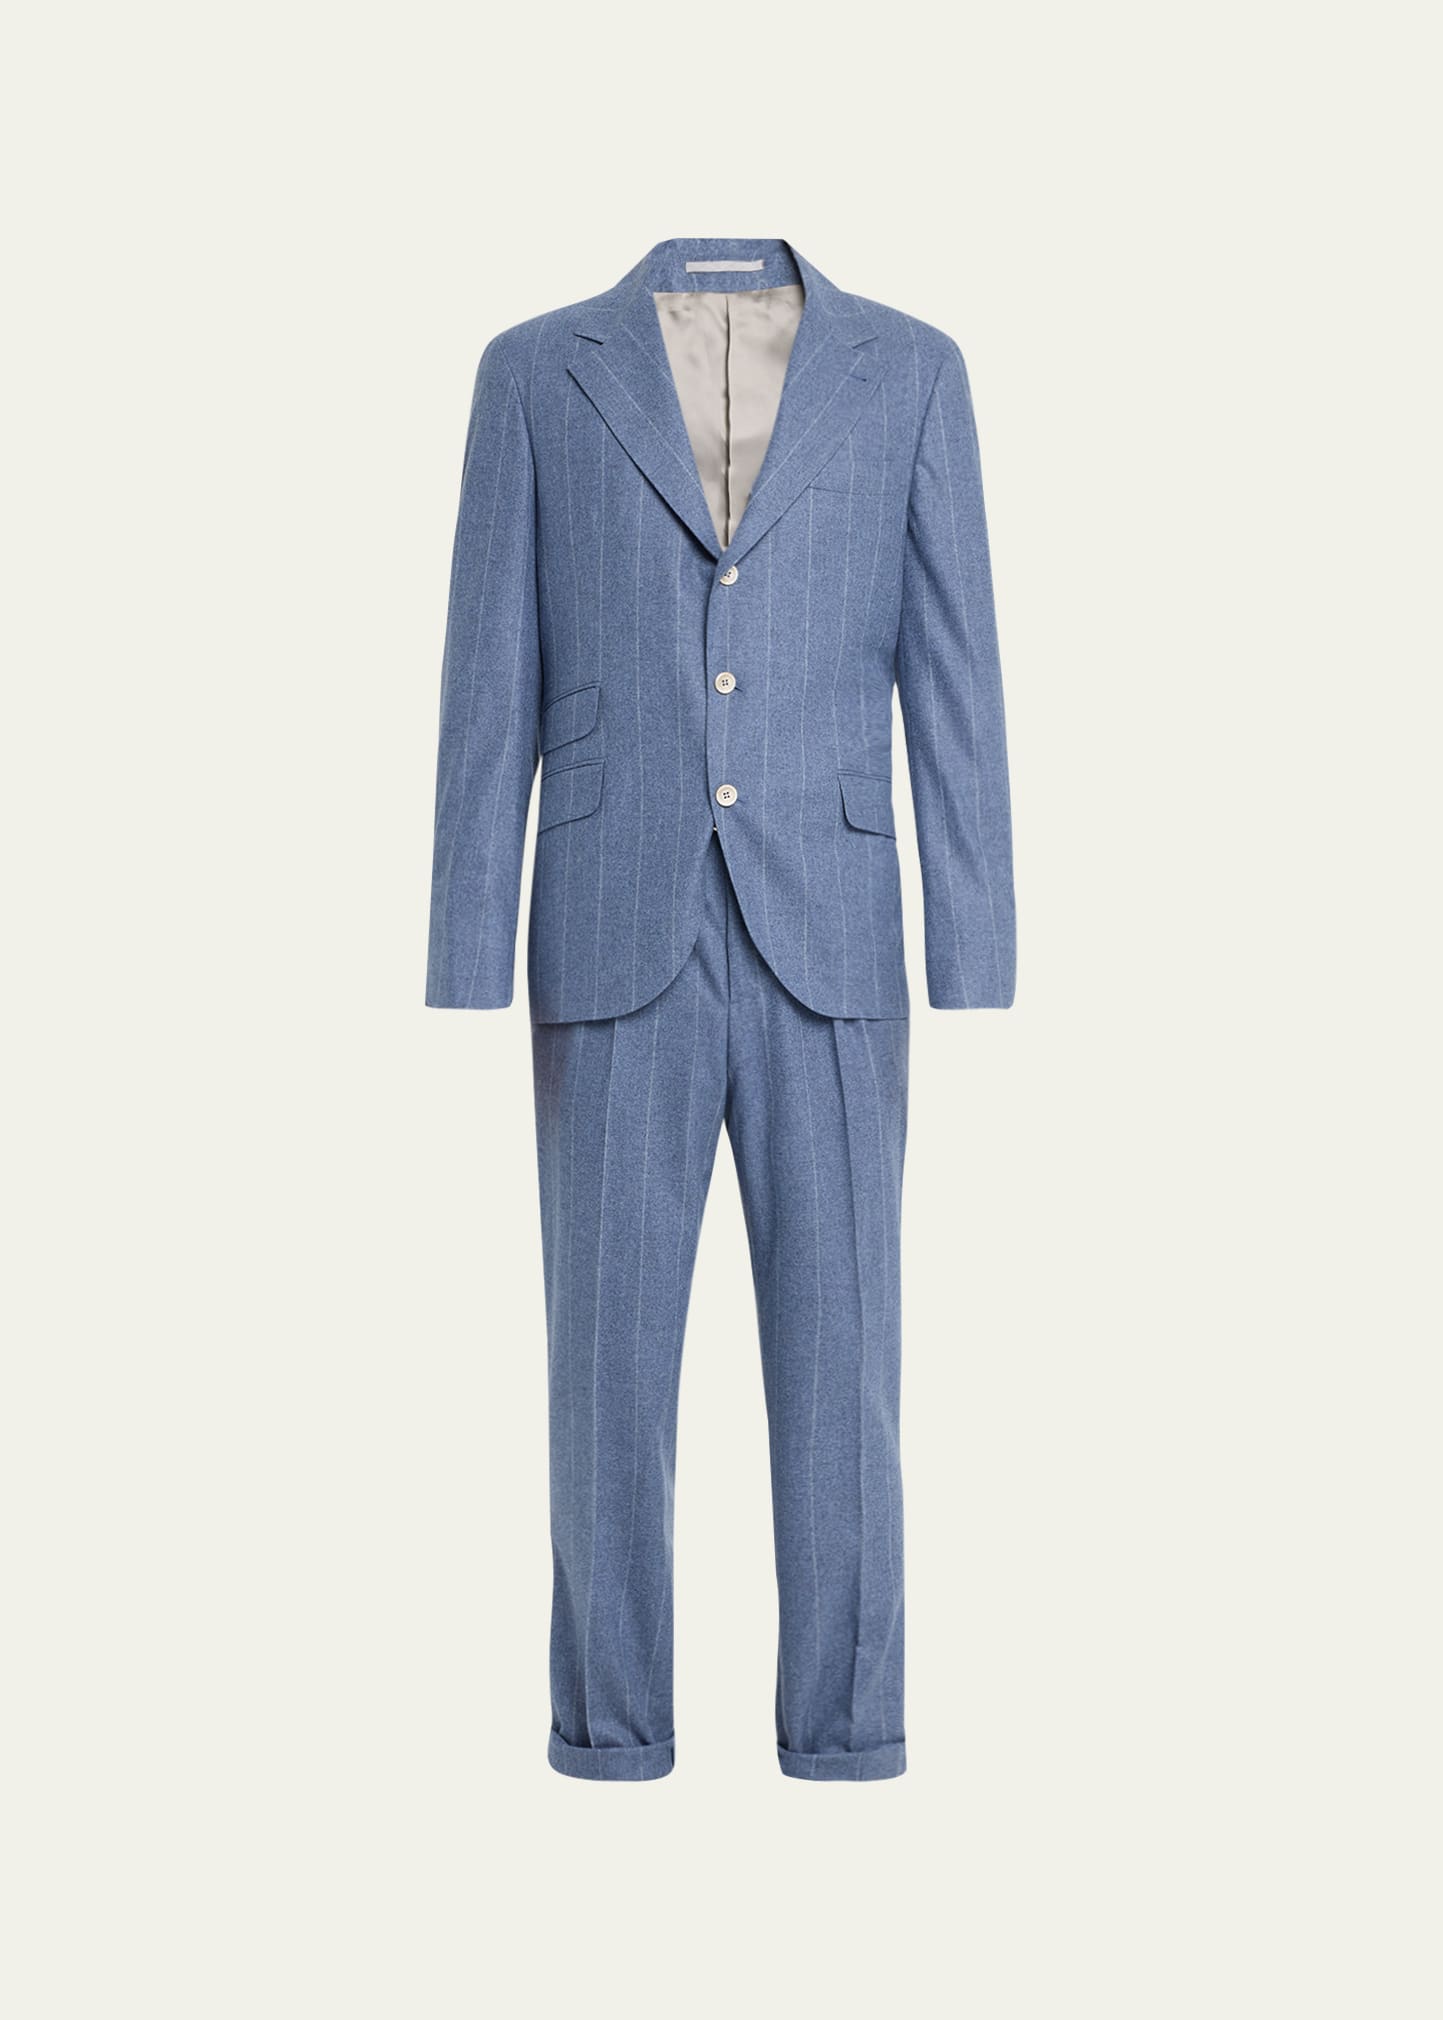 Brunello Cucinelli Men's Striped Light Flannel Suit In C2606 Denim Blue